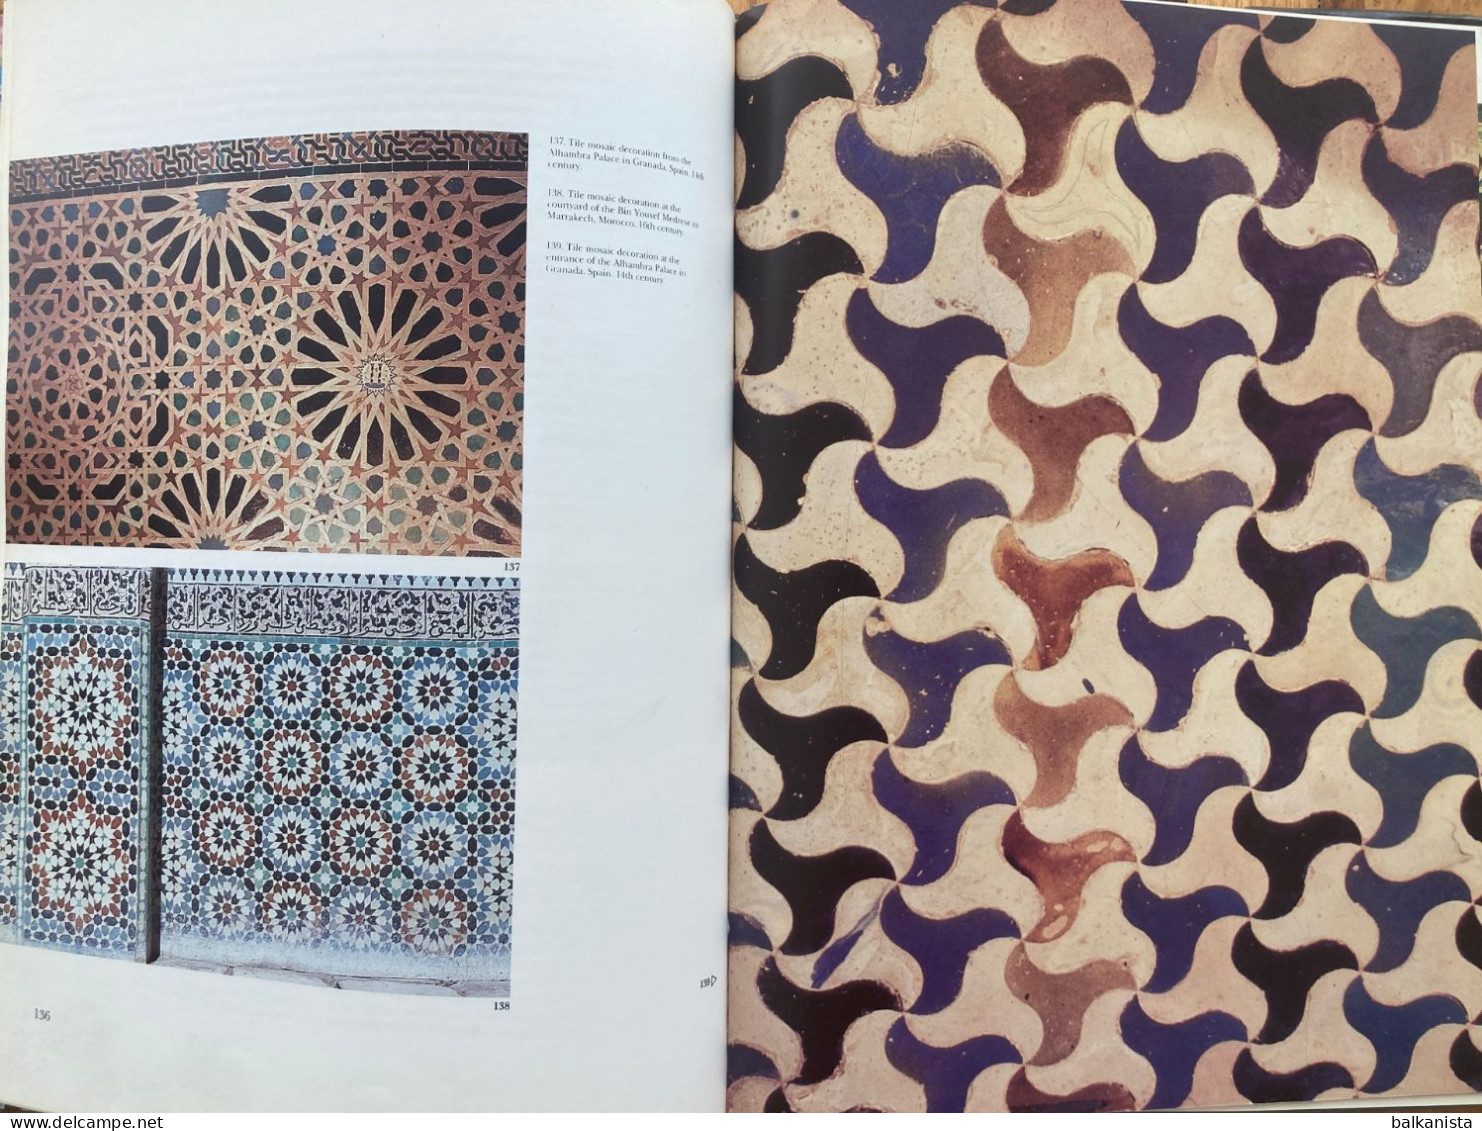 Ceramic Tiles In Islamic Architecture Gonul Oney